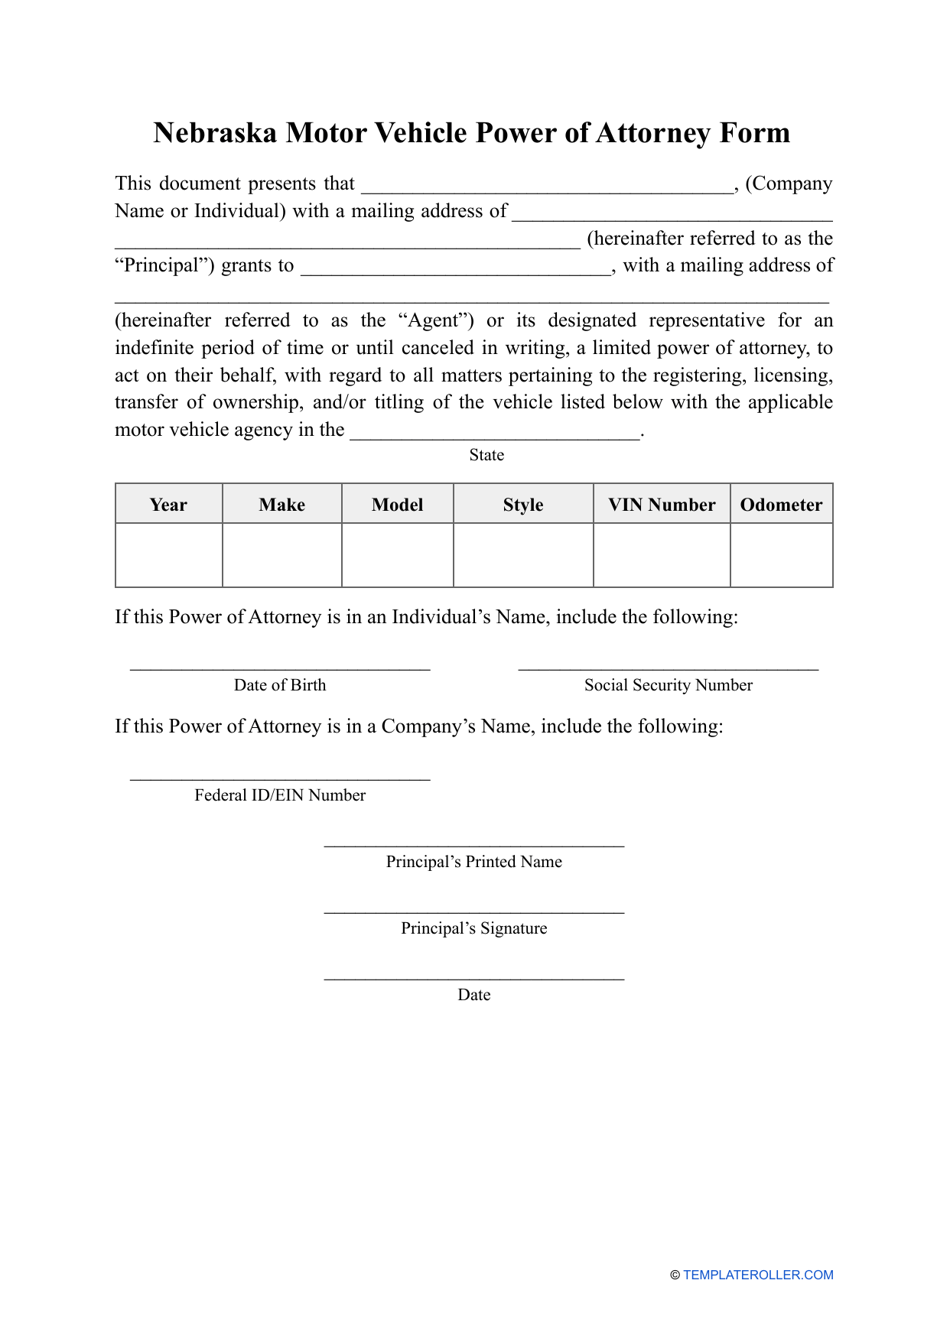 Motor Vehicle Power of Attorney Form - Nebraska, Page 1